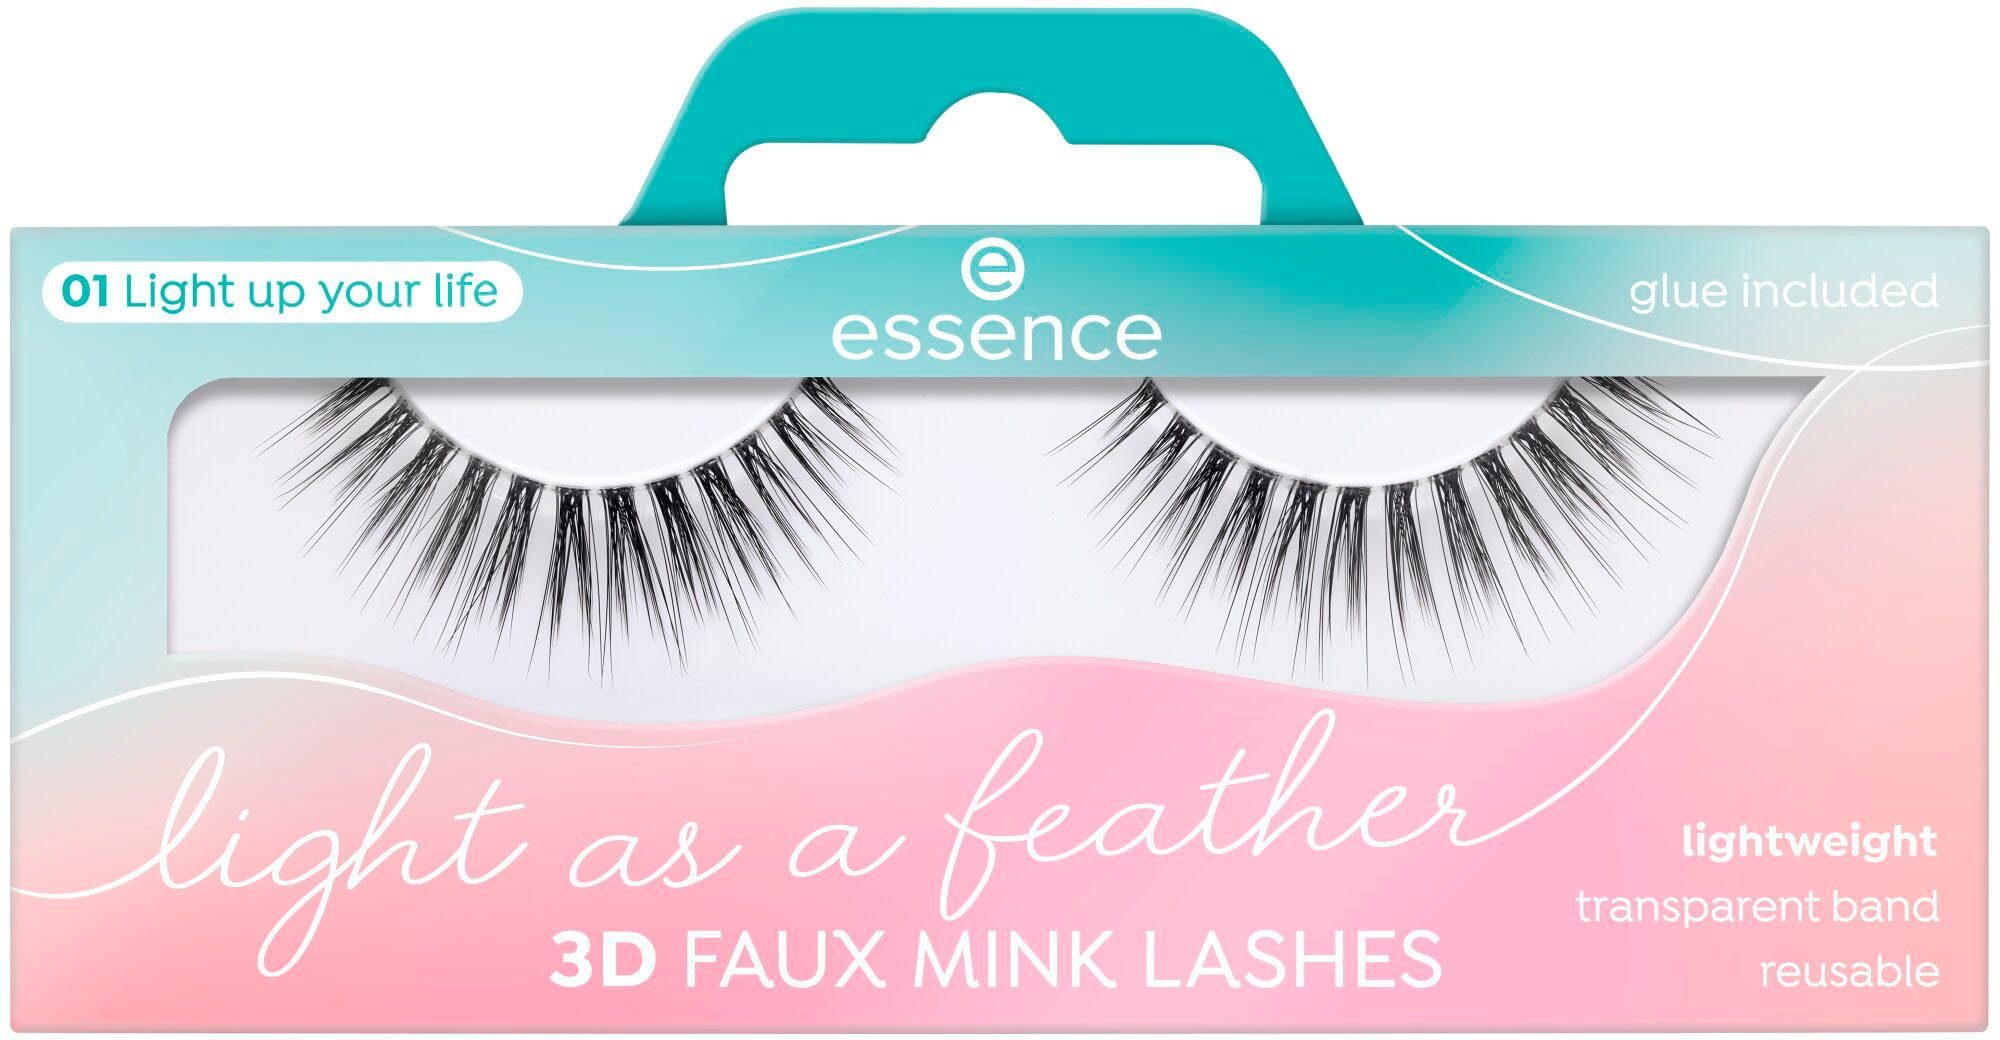 Essence Light a feather as tlg. 3D 3 faux lashes, Set, mink Bandwimpern